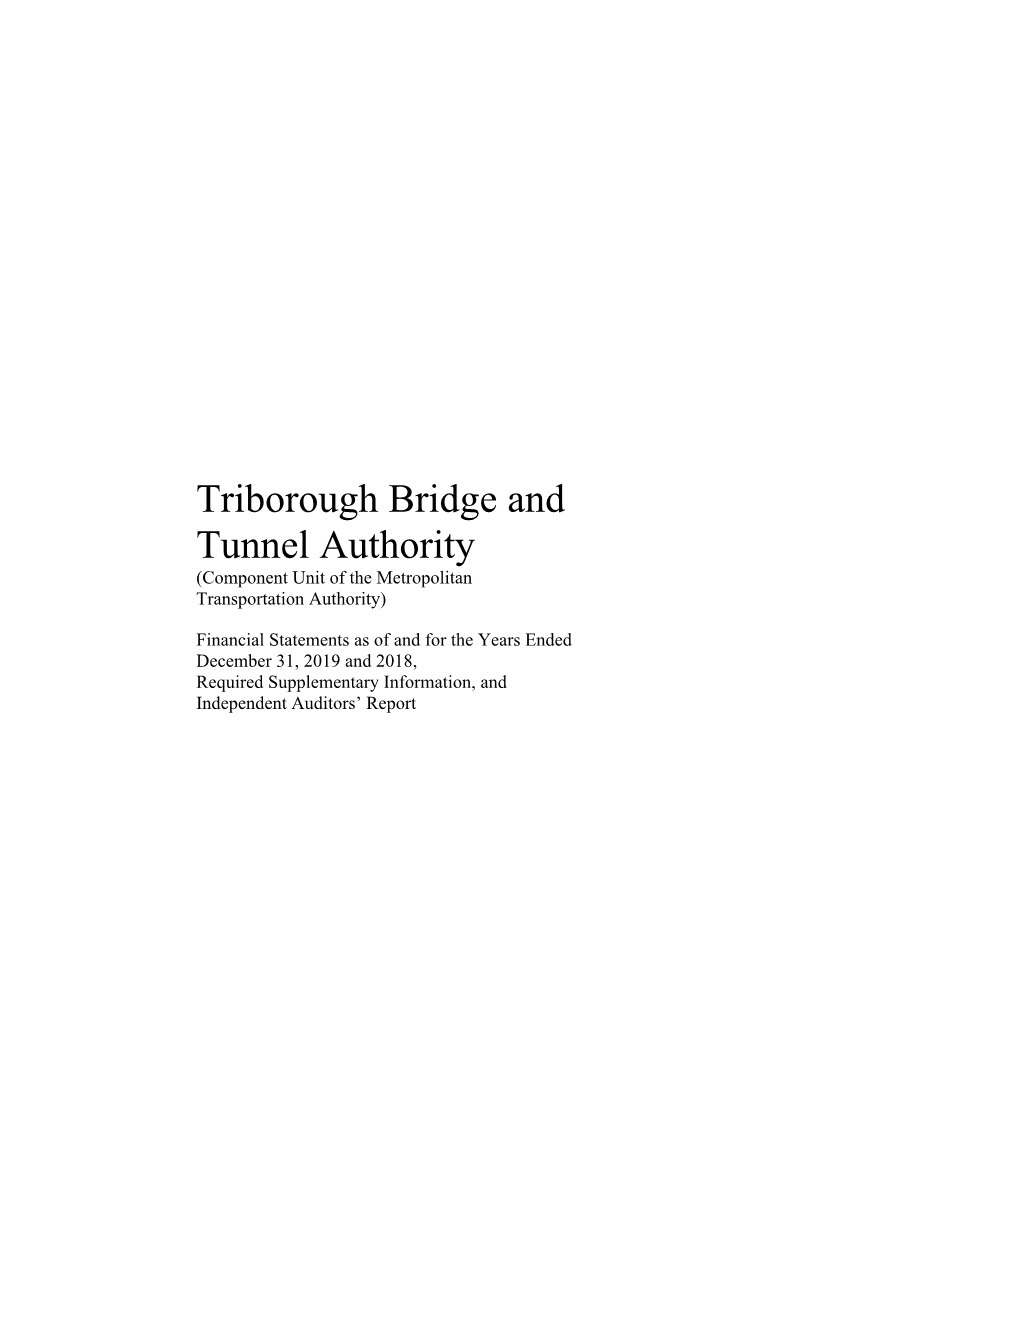 Triborough Bridge and Tunnel Authority